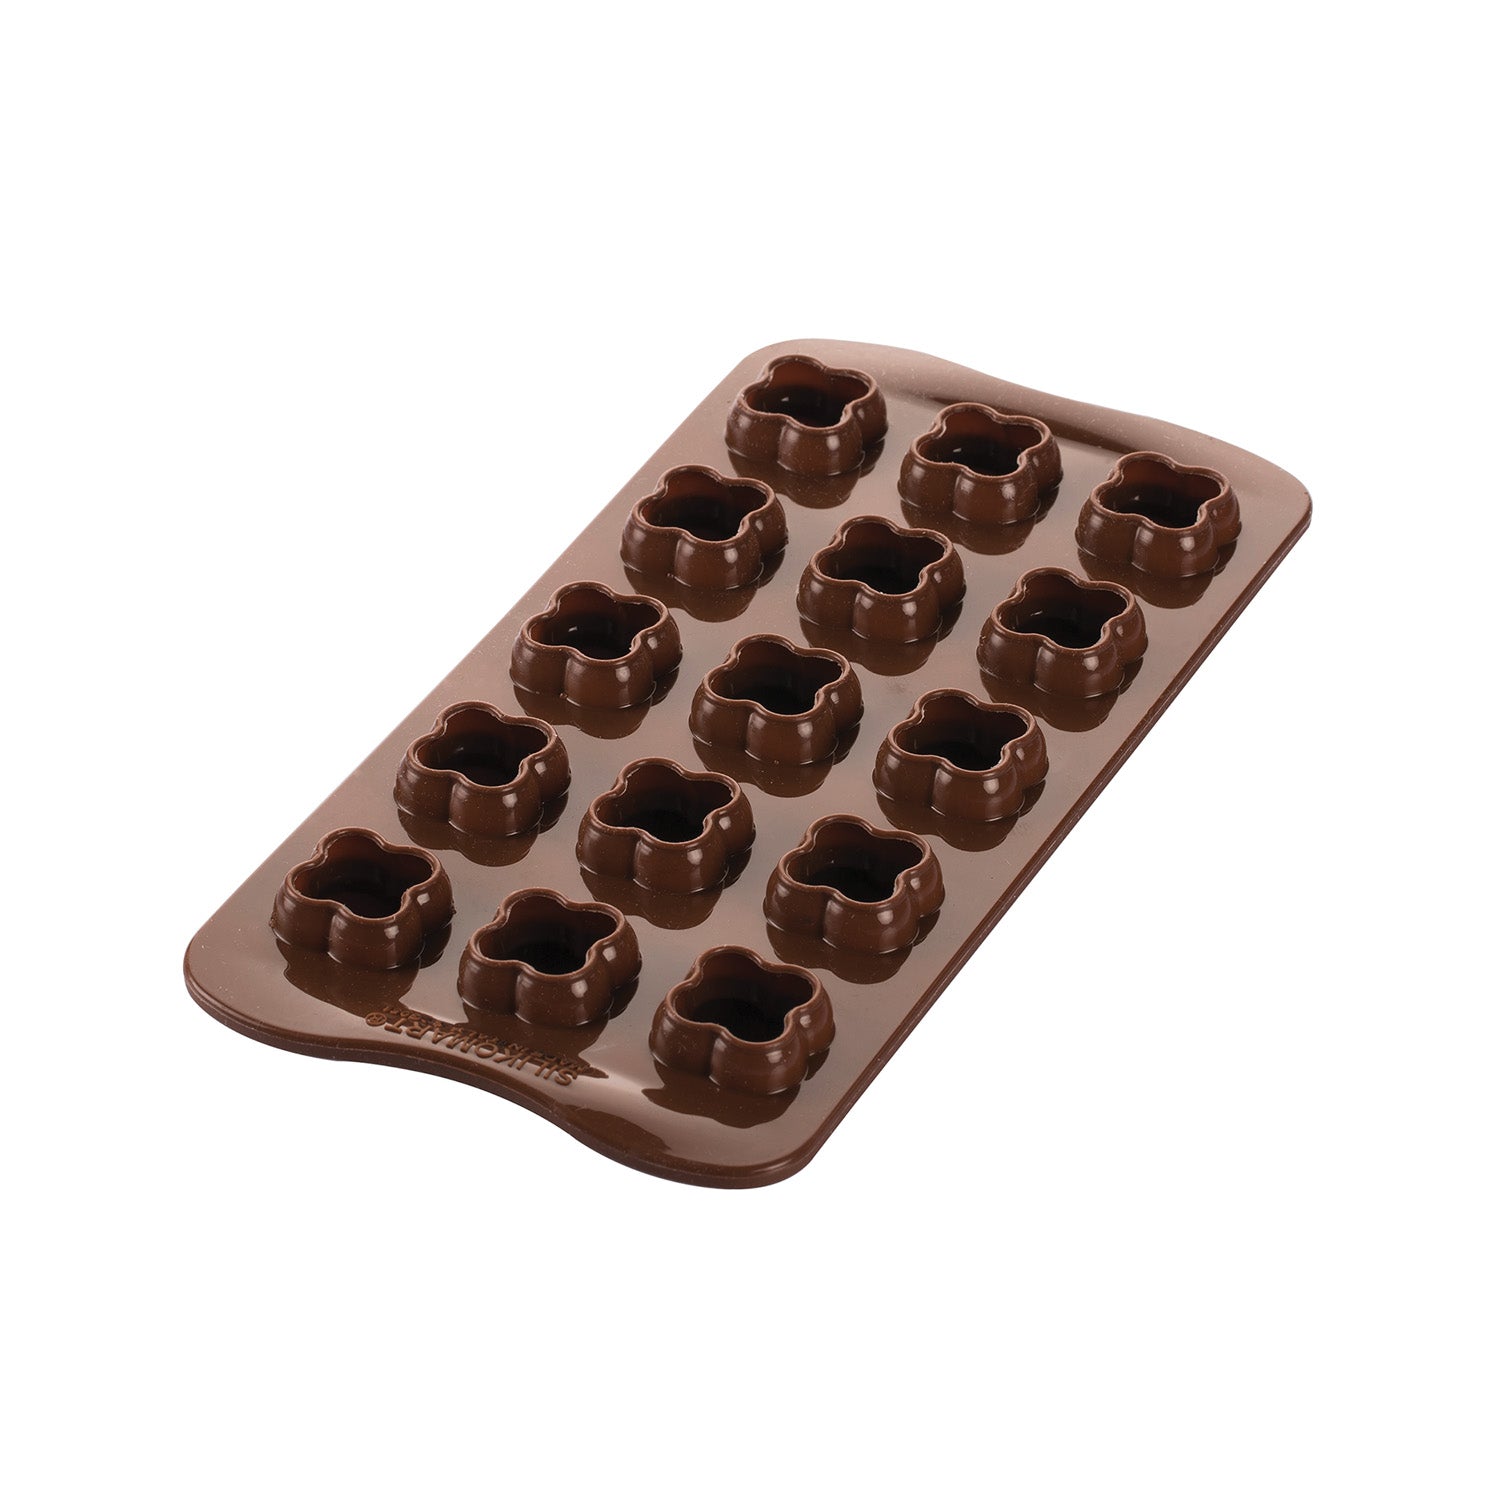 Silikomart - Silikonform - Schokoladenform Game